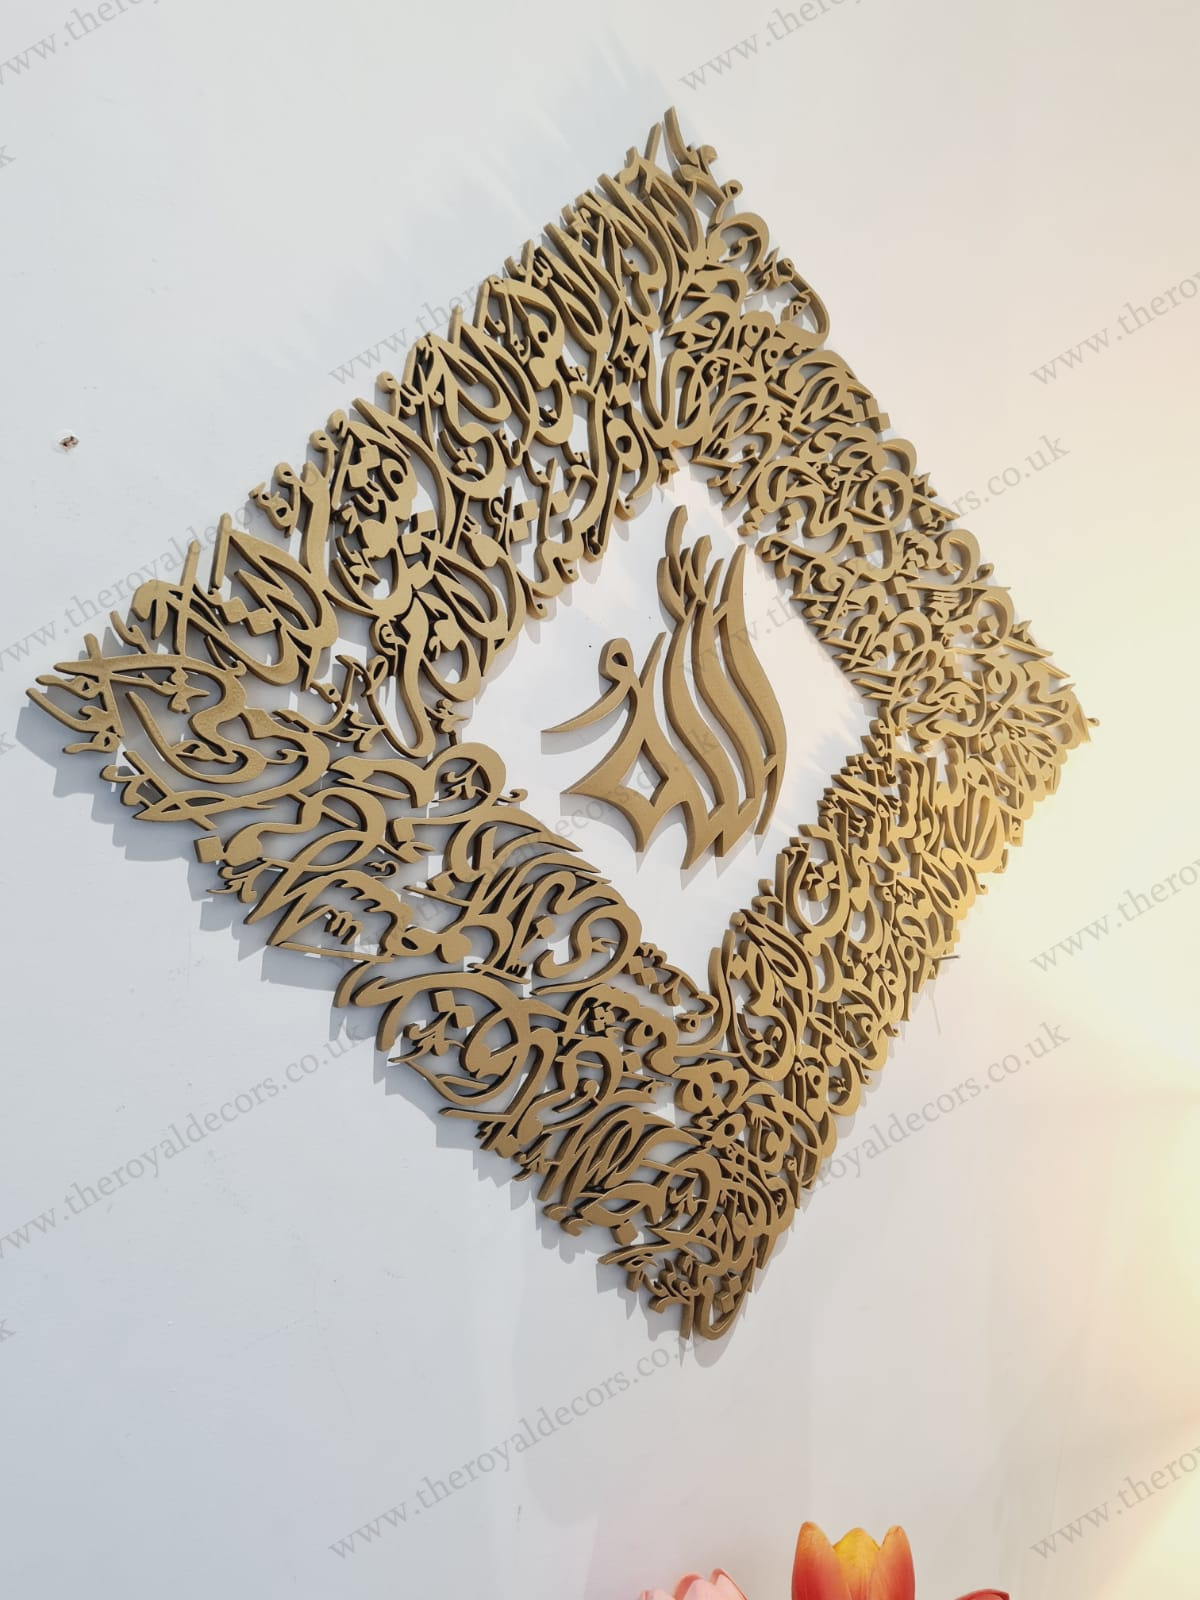 3D Diamond or Square shaped Ayatul Kursi Islamic Calligraphy Wall Art arabic home decor